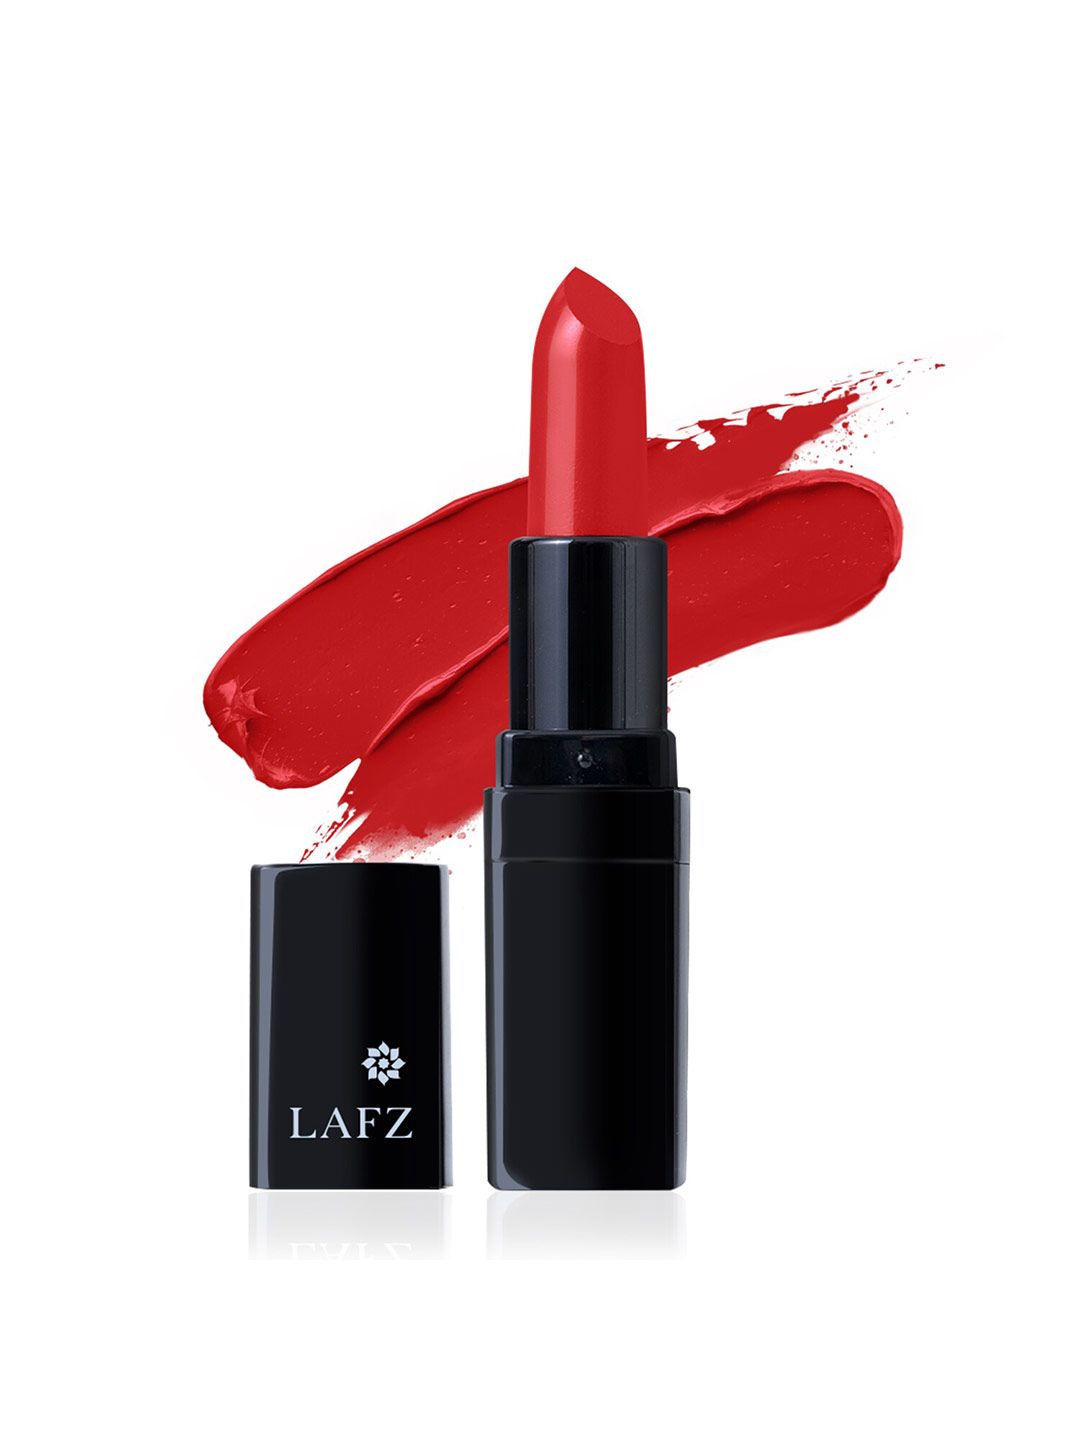 LAFZ Velvet Matte Bullet Lipstick - Rusty Red 4.5g Price in India